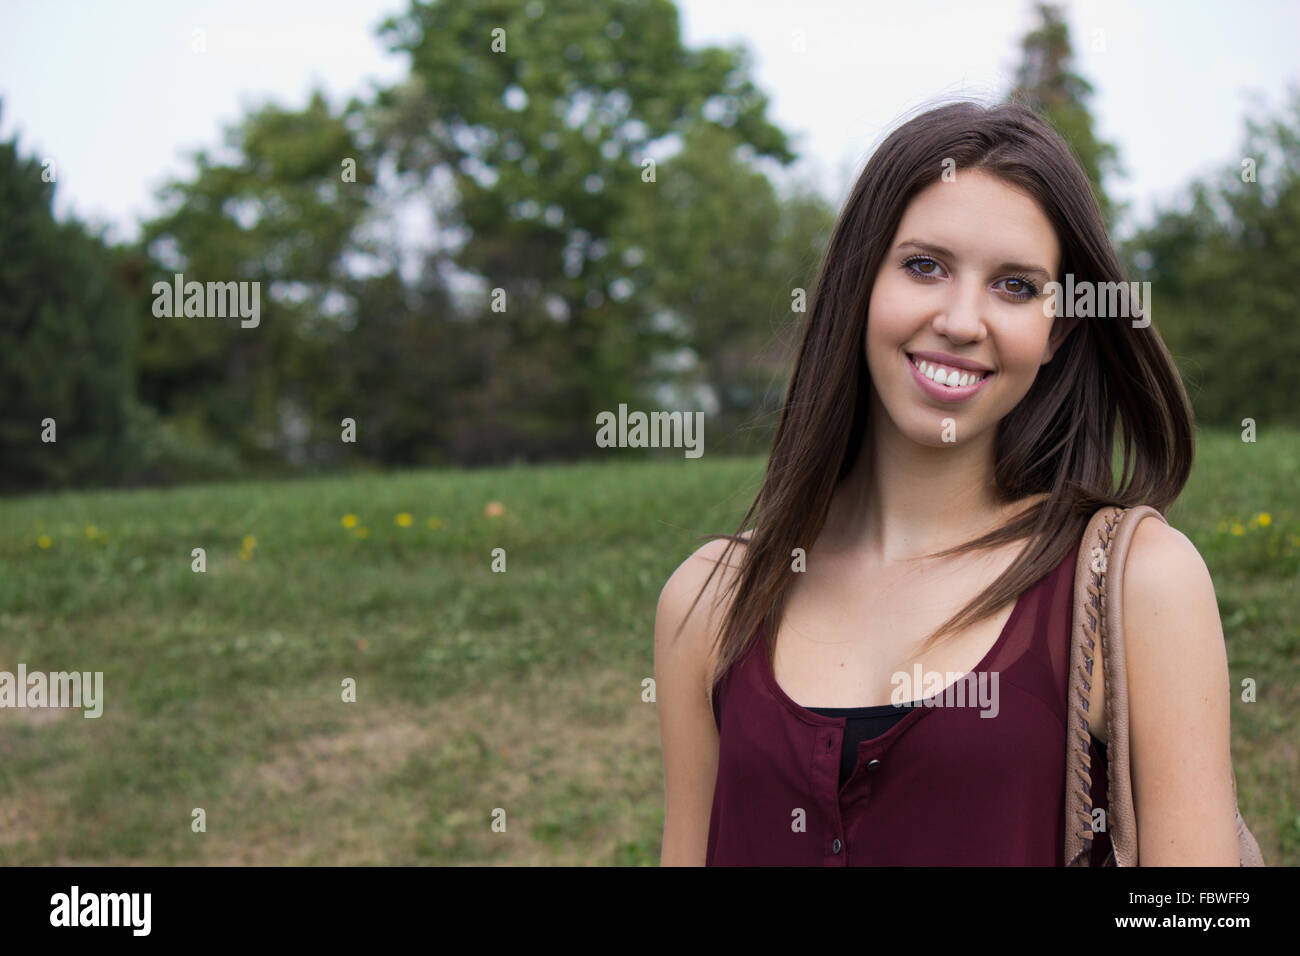 Lächeln im Park - Exemplar Stockfoto